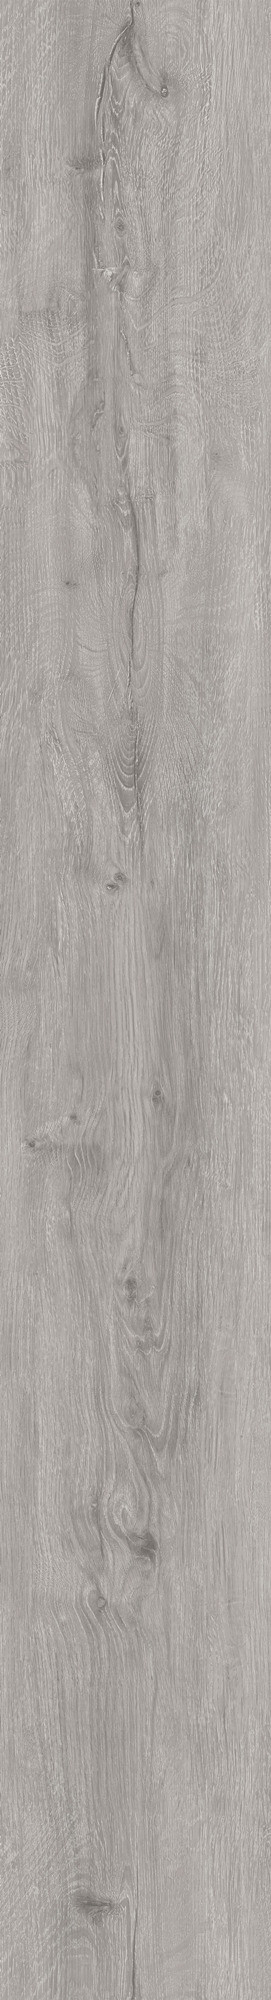 Hanflor Classic Gray Oak Glue Down Vinyl Plank PVC Flooring VOC Free Recyclable Budget Friendly 7''x48''  HIF 20471